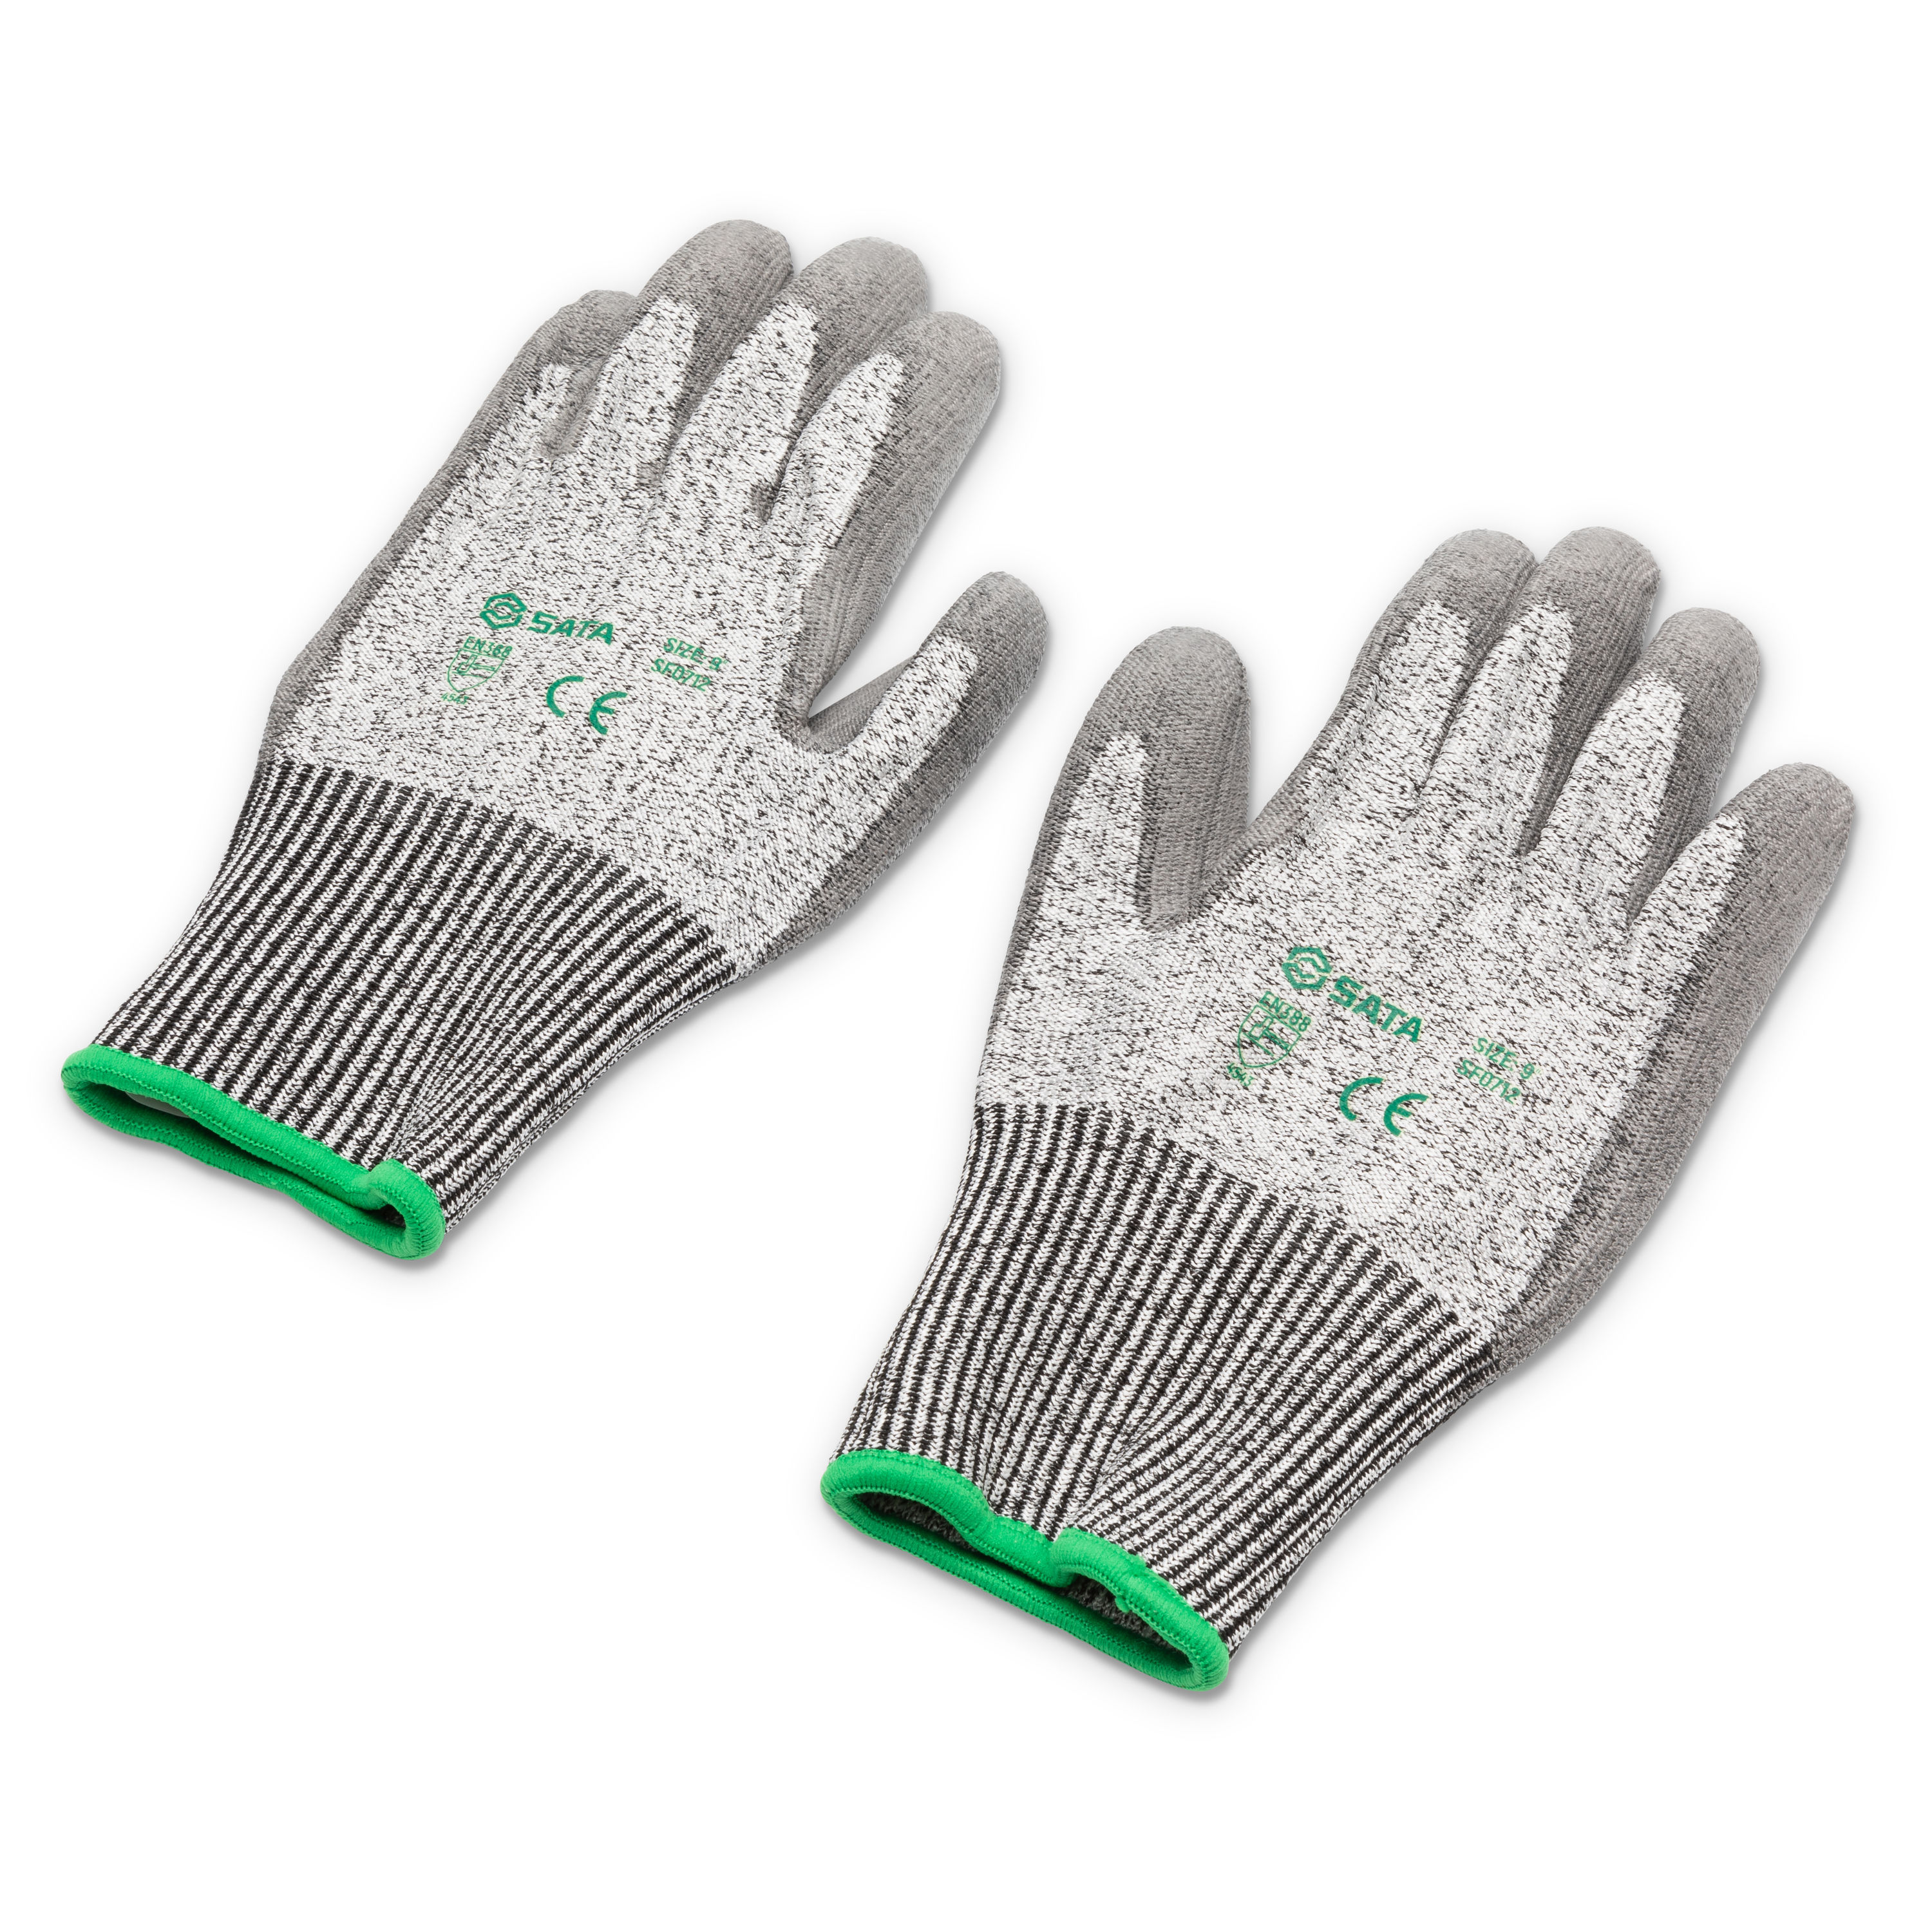 Cut Resistant Gloves Work Gloves at